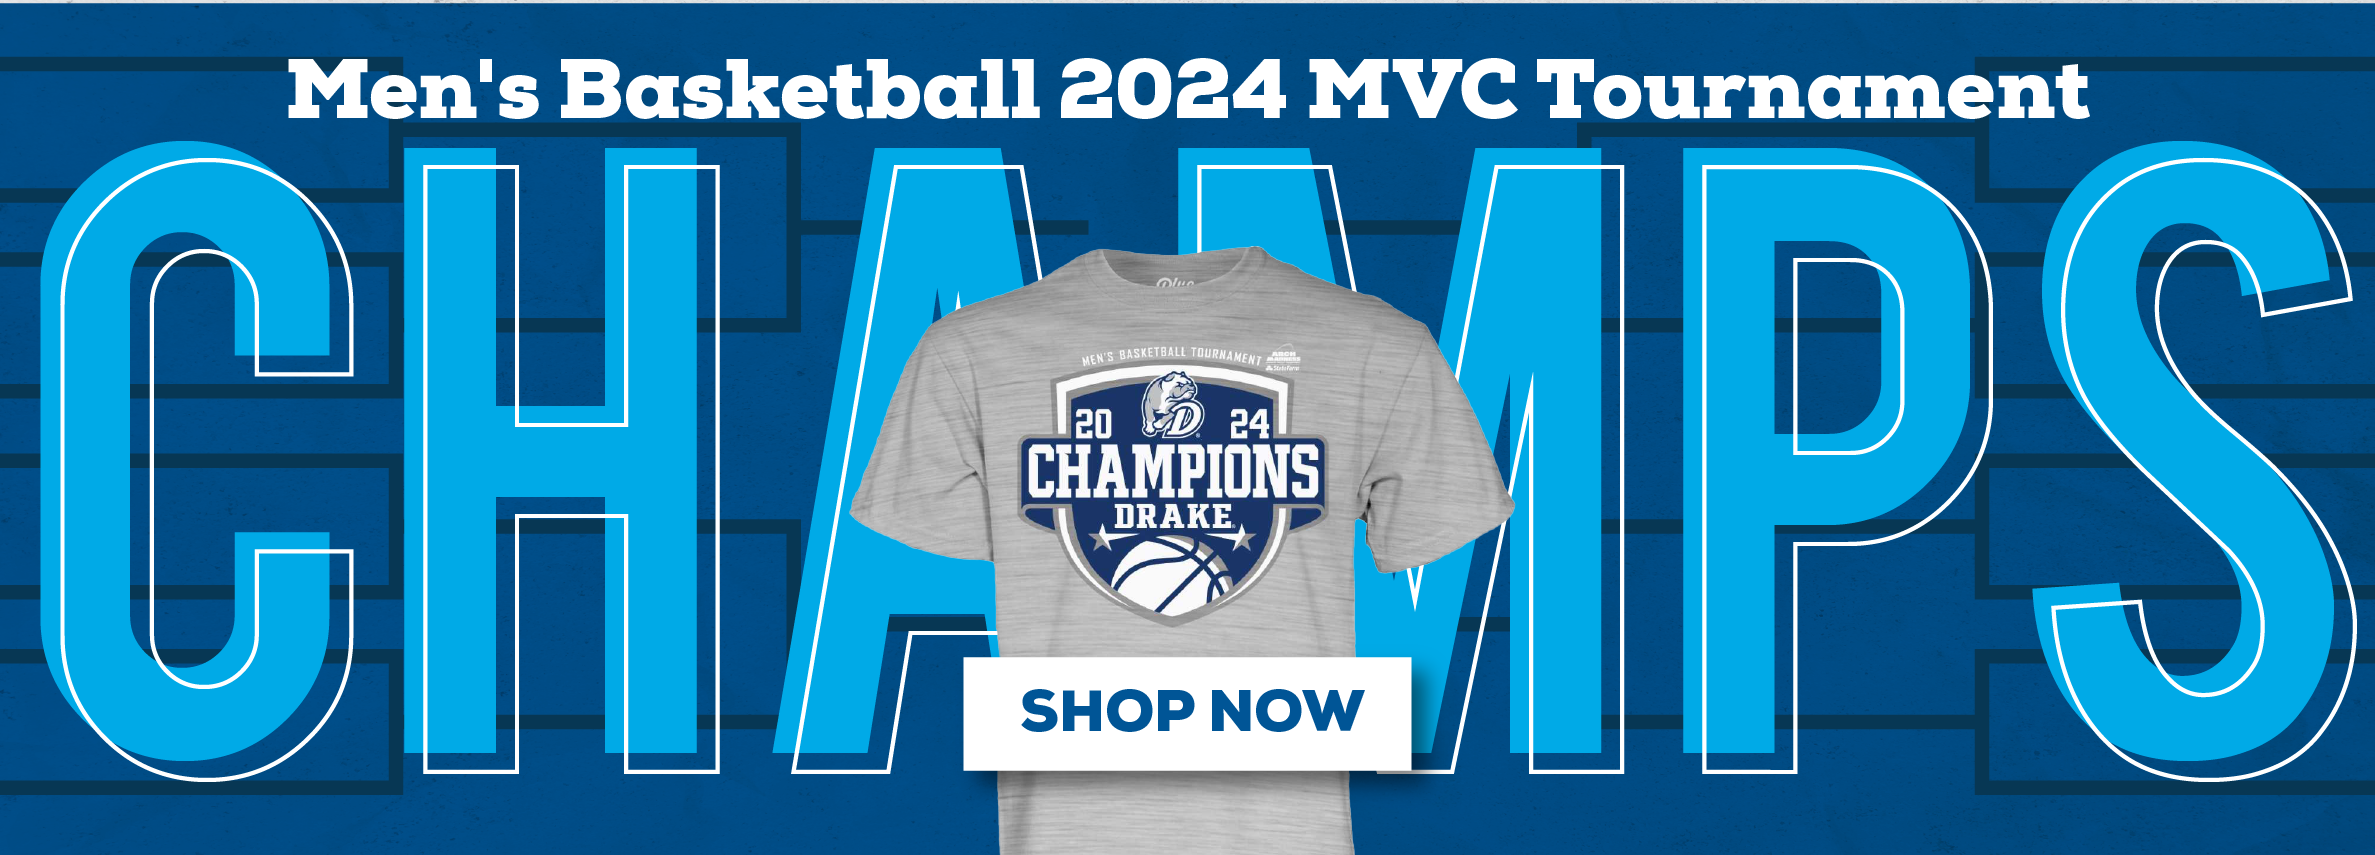 Men's Basketball 2024 MVC Tournament Champs. Shop Now